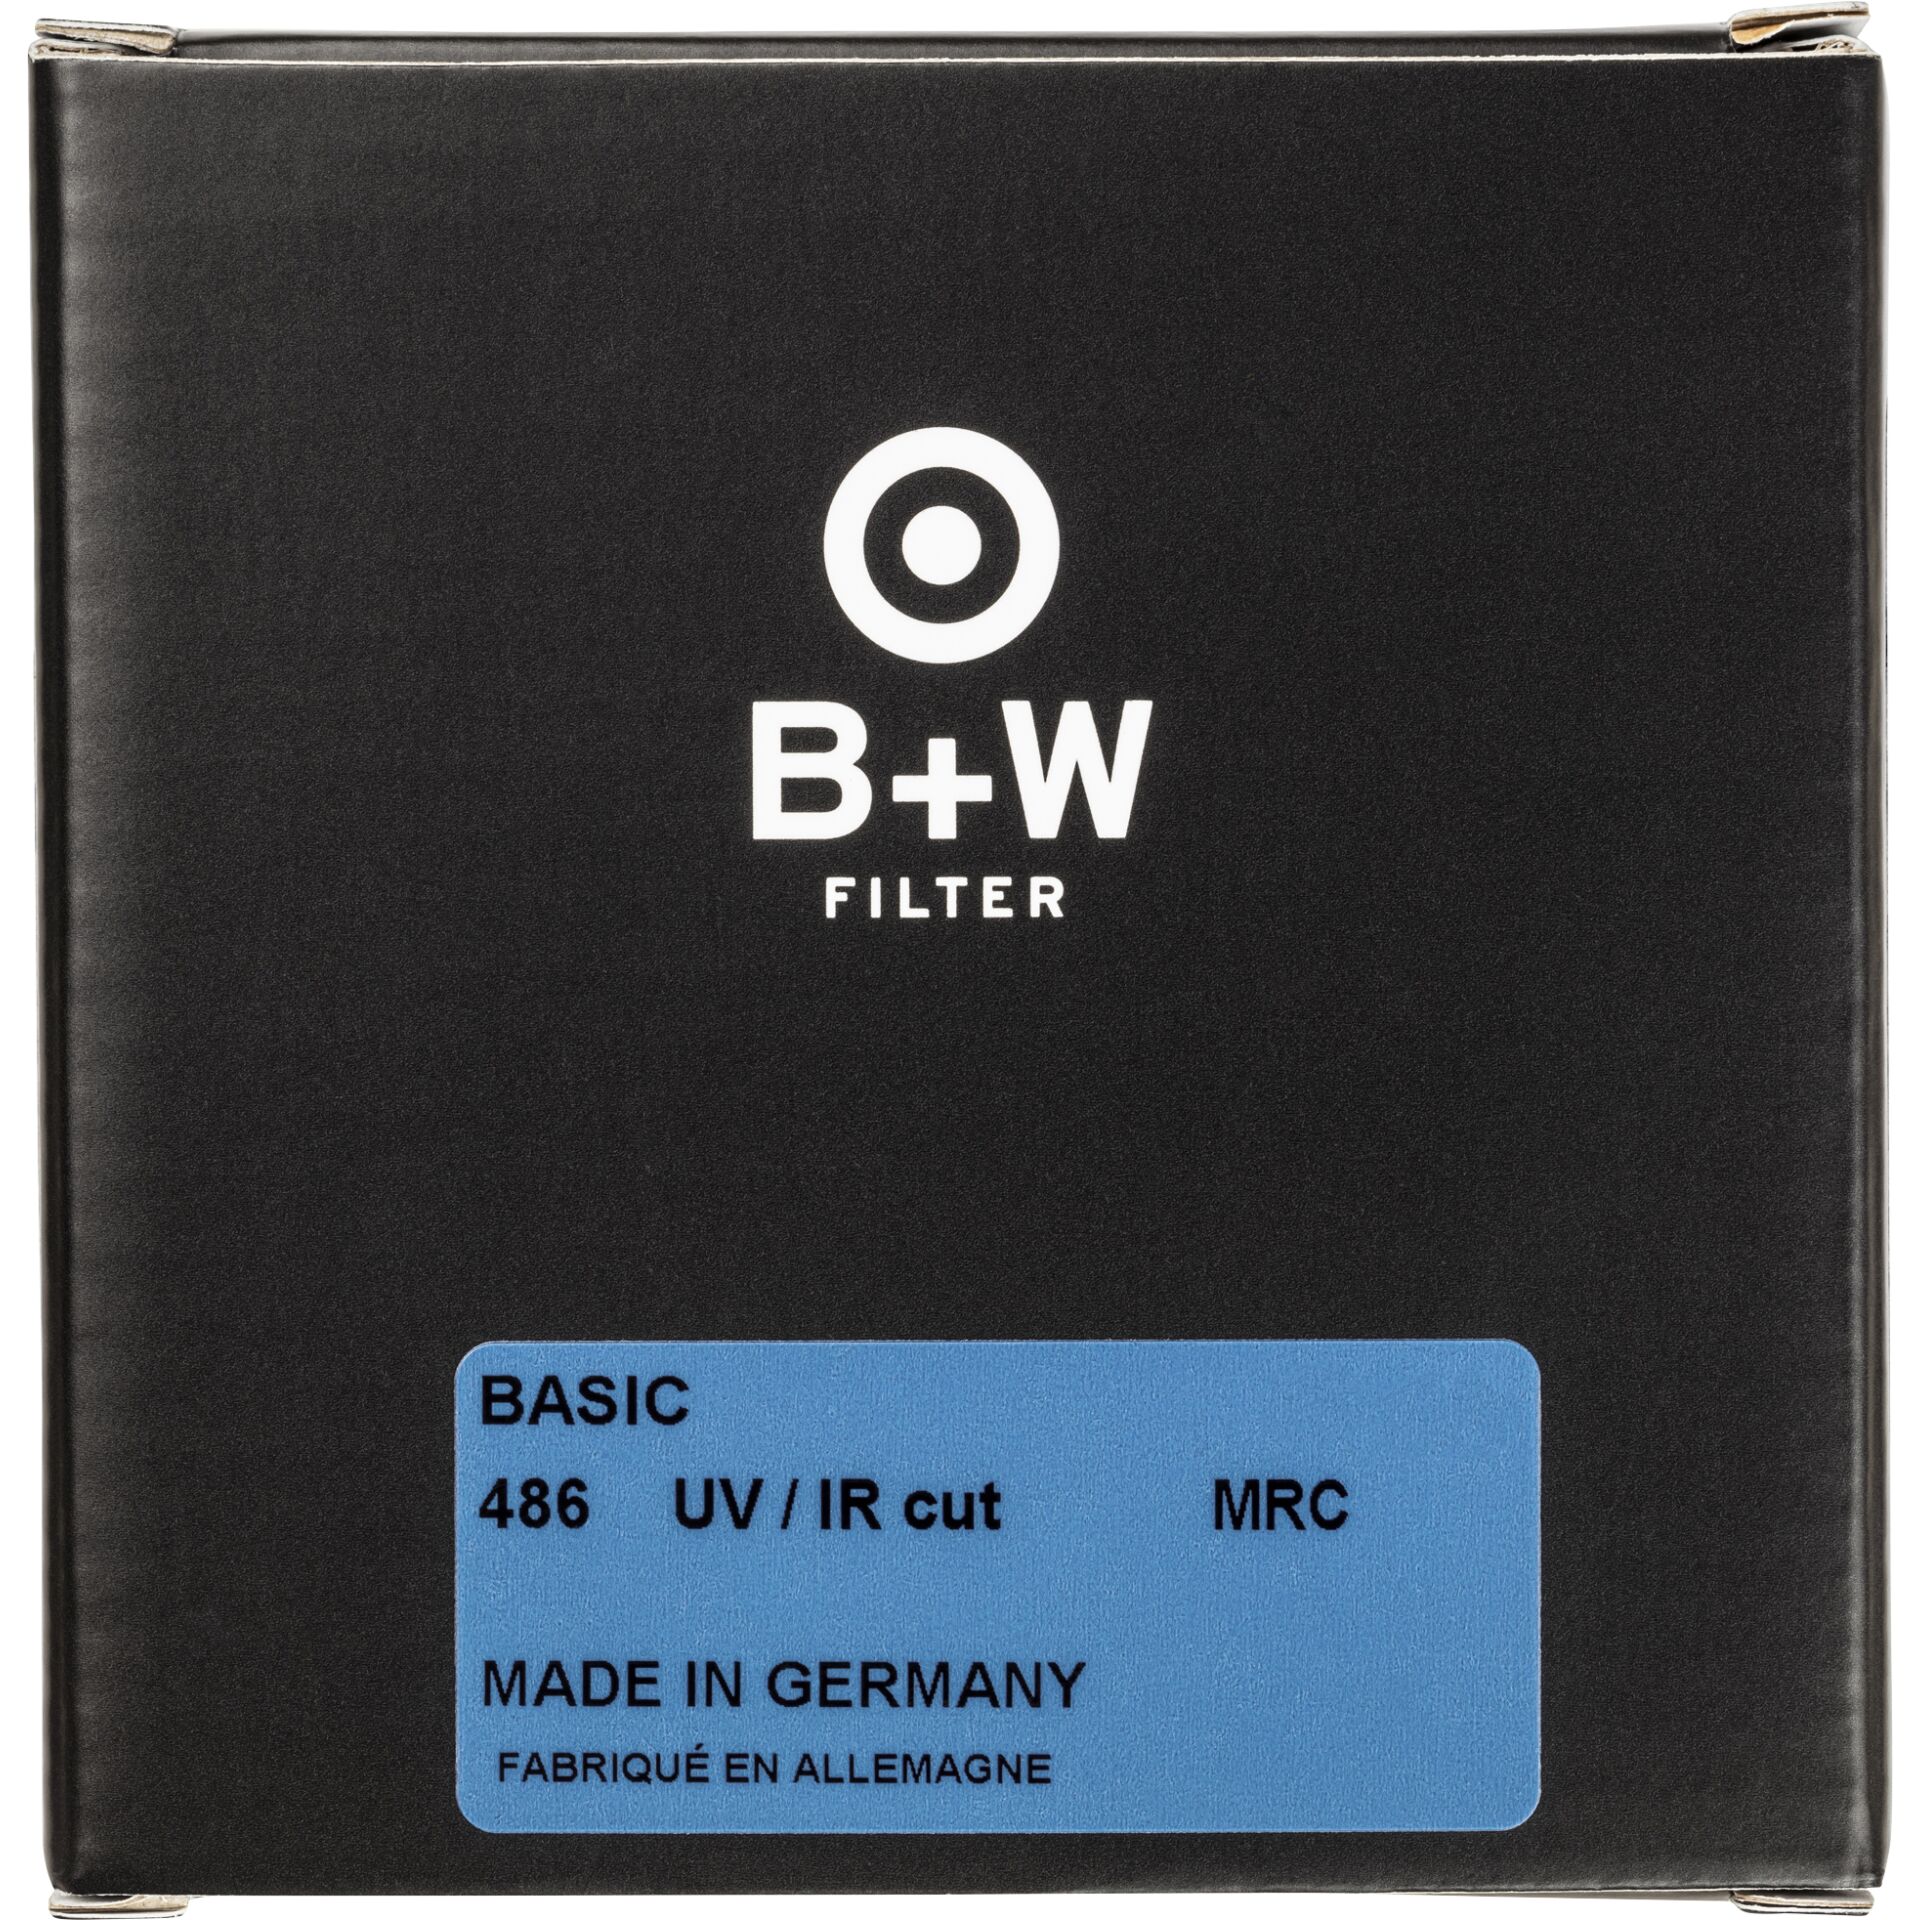 B+W UV-IR CUT 486 MRC BASIC 62mm